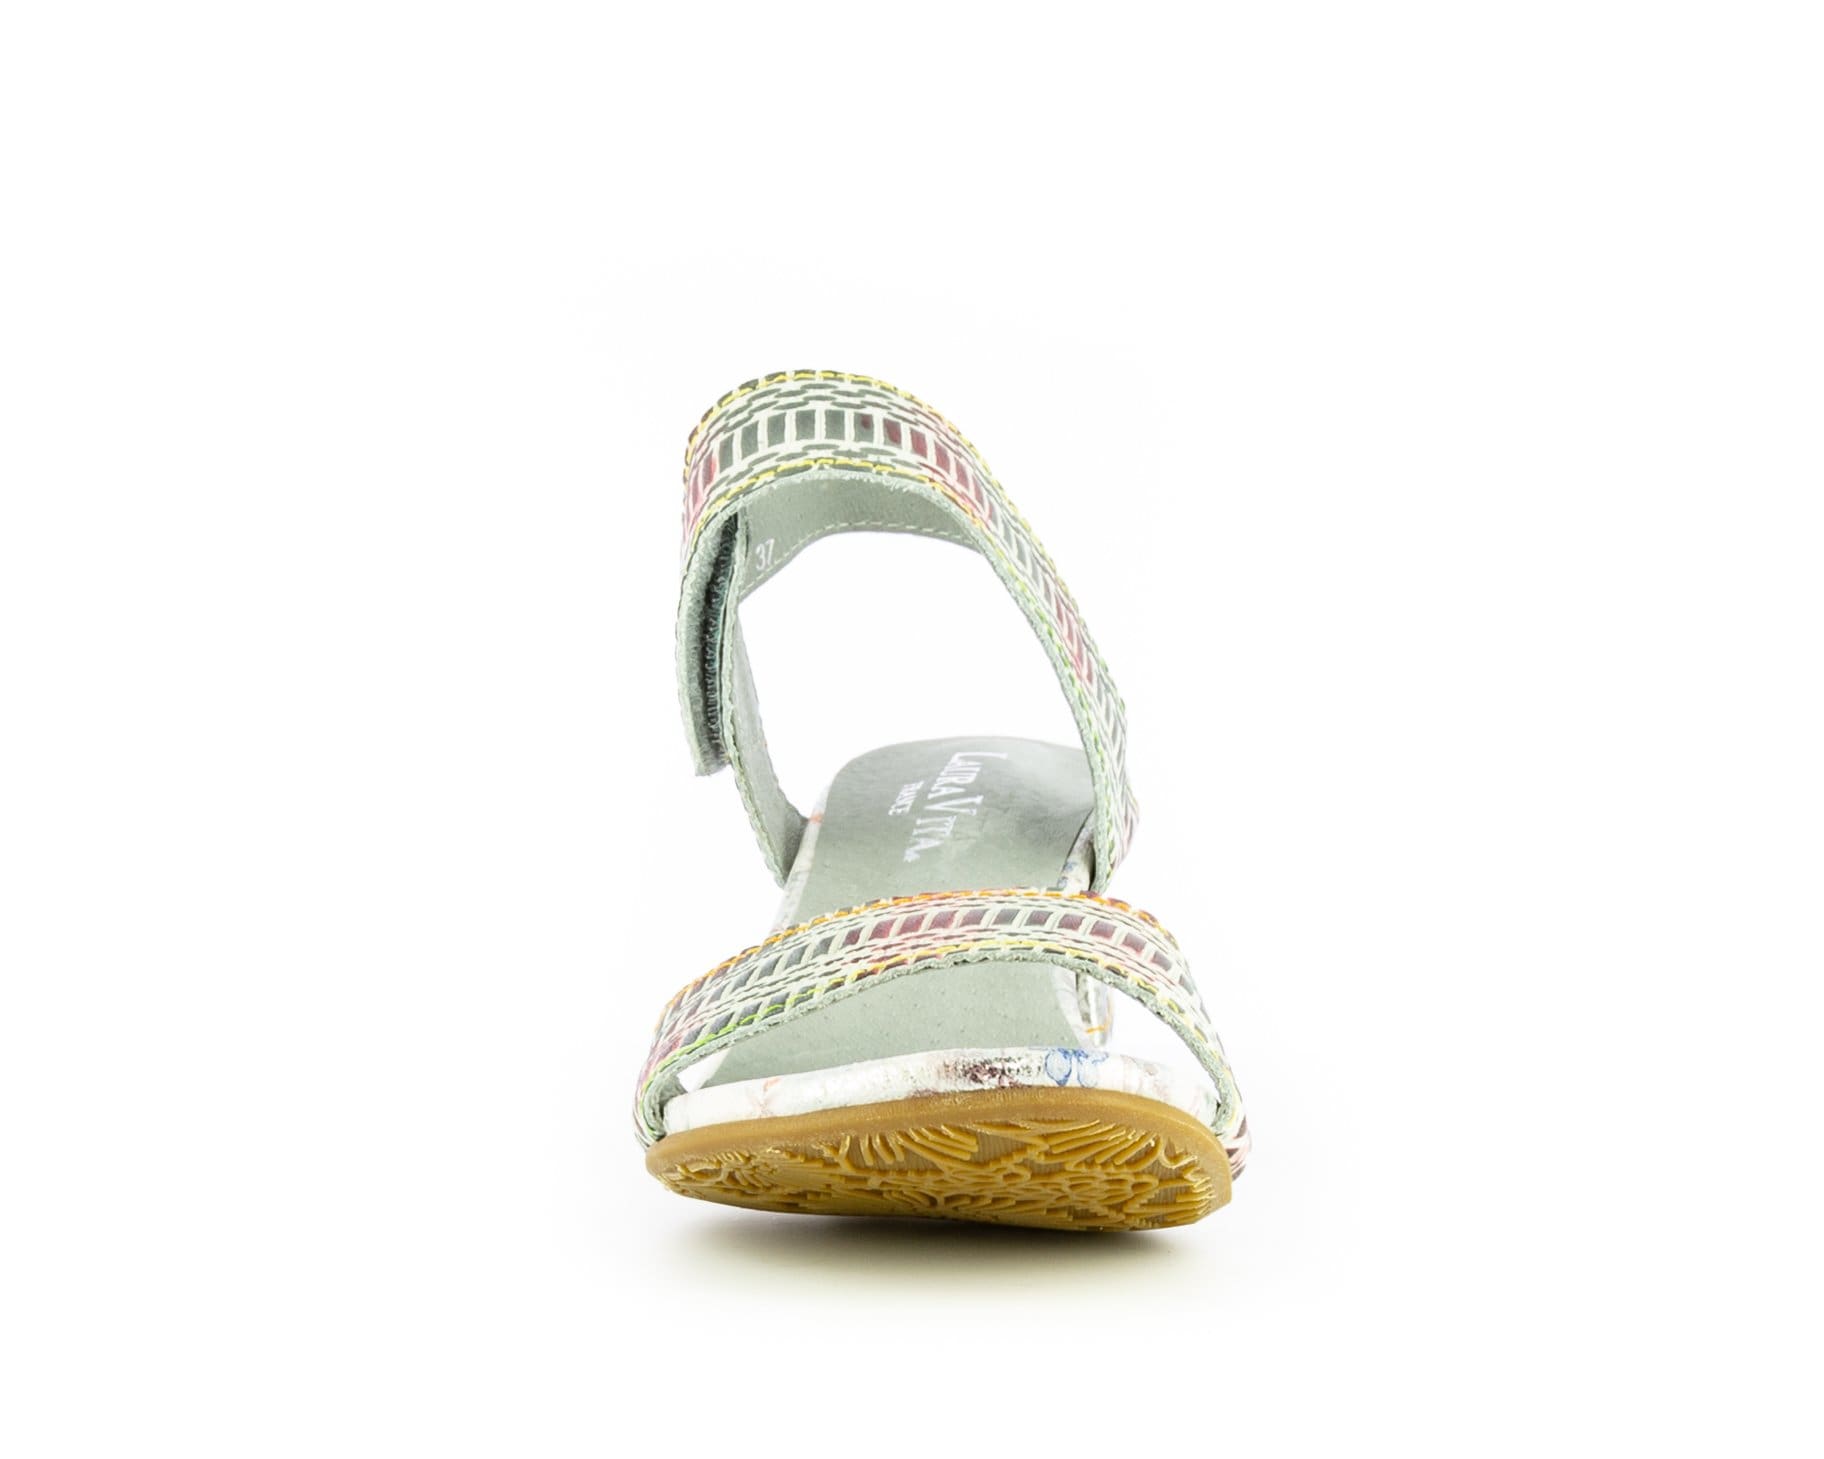 HECBINO 01 skor - Sandal